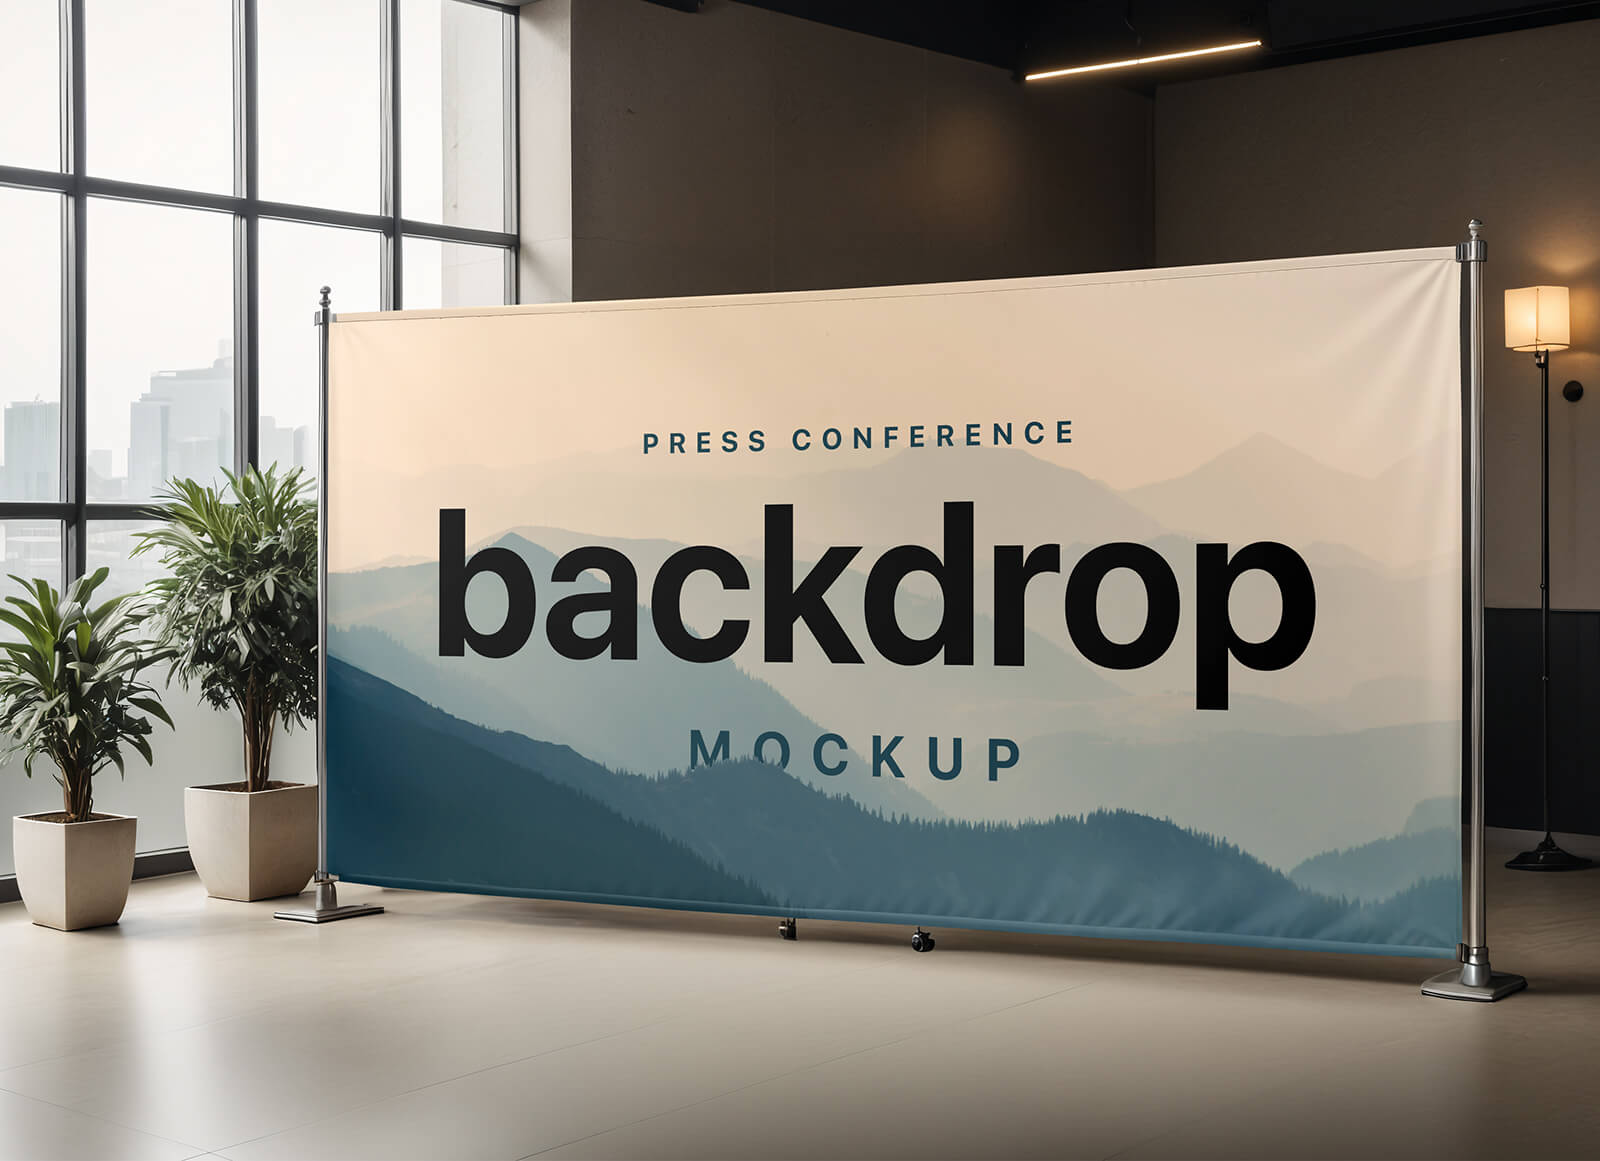 Free-Press-Conference-Backdrop-Mockup-PSD